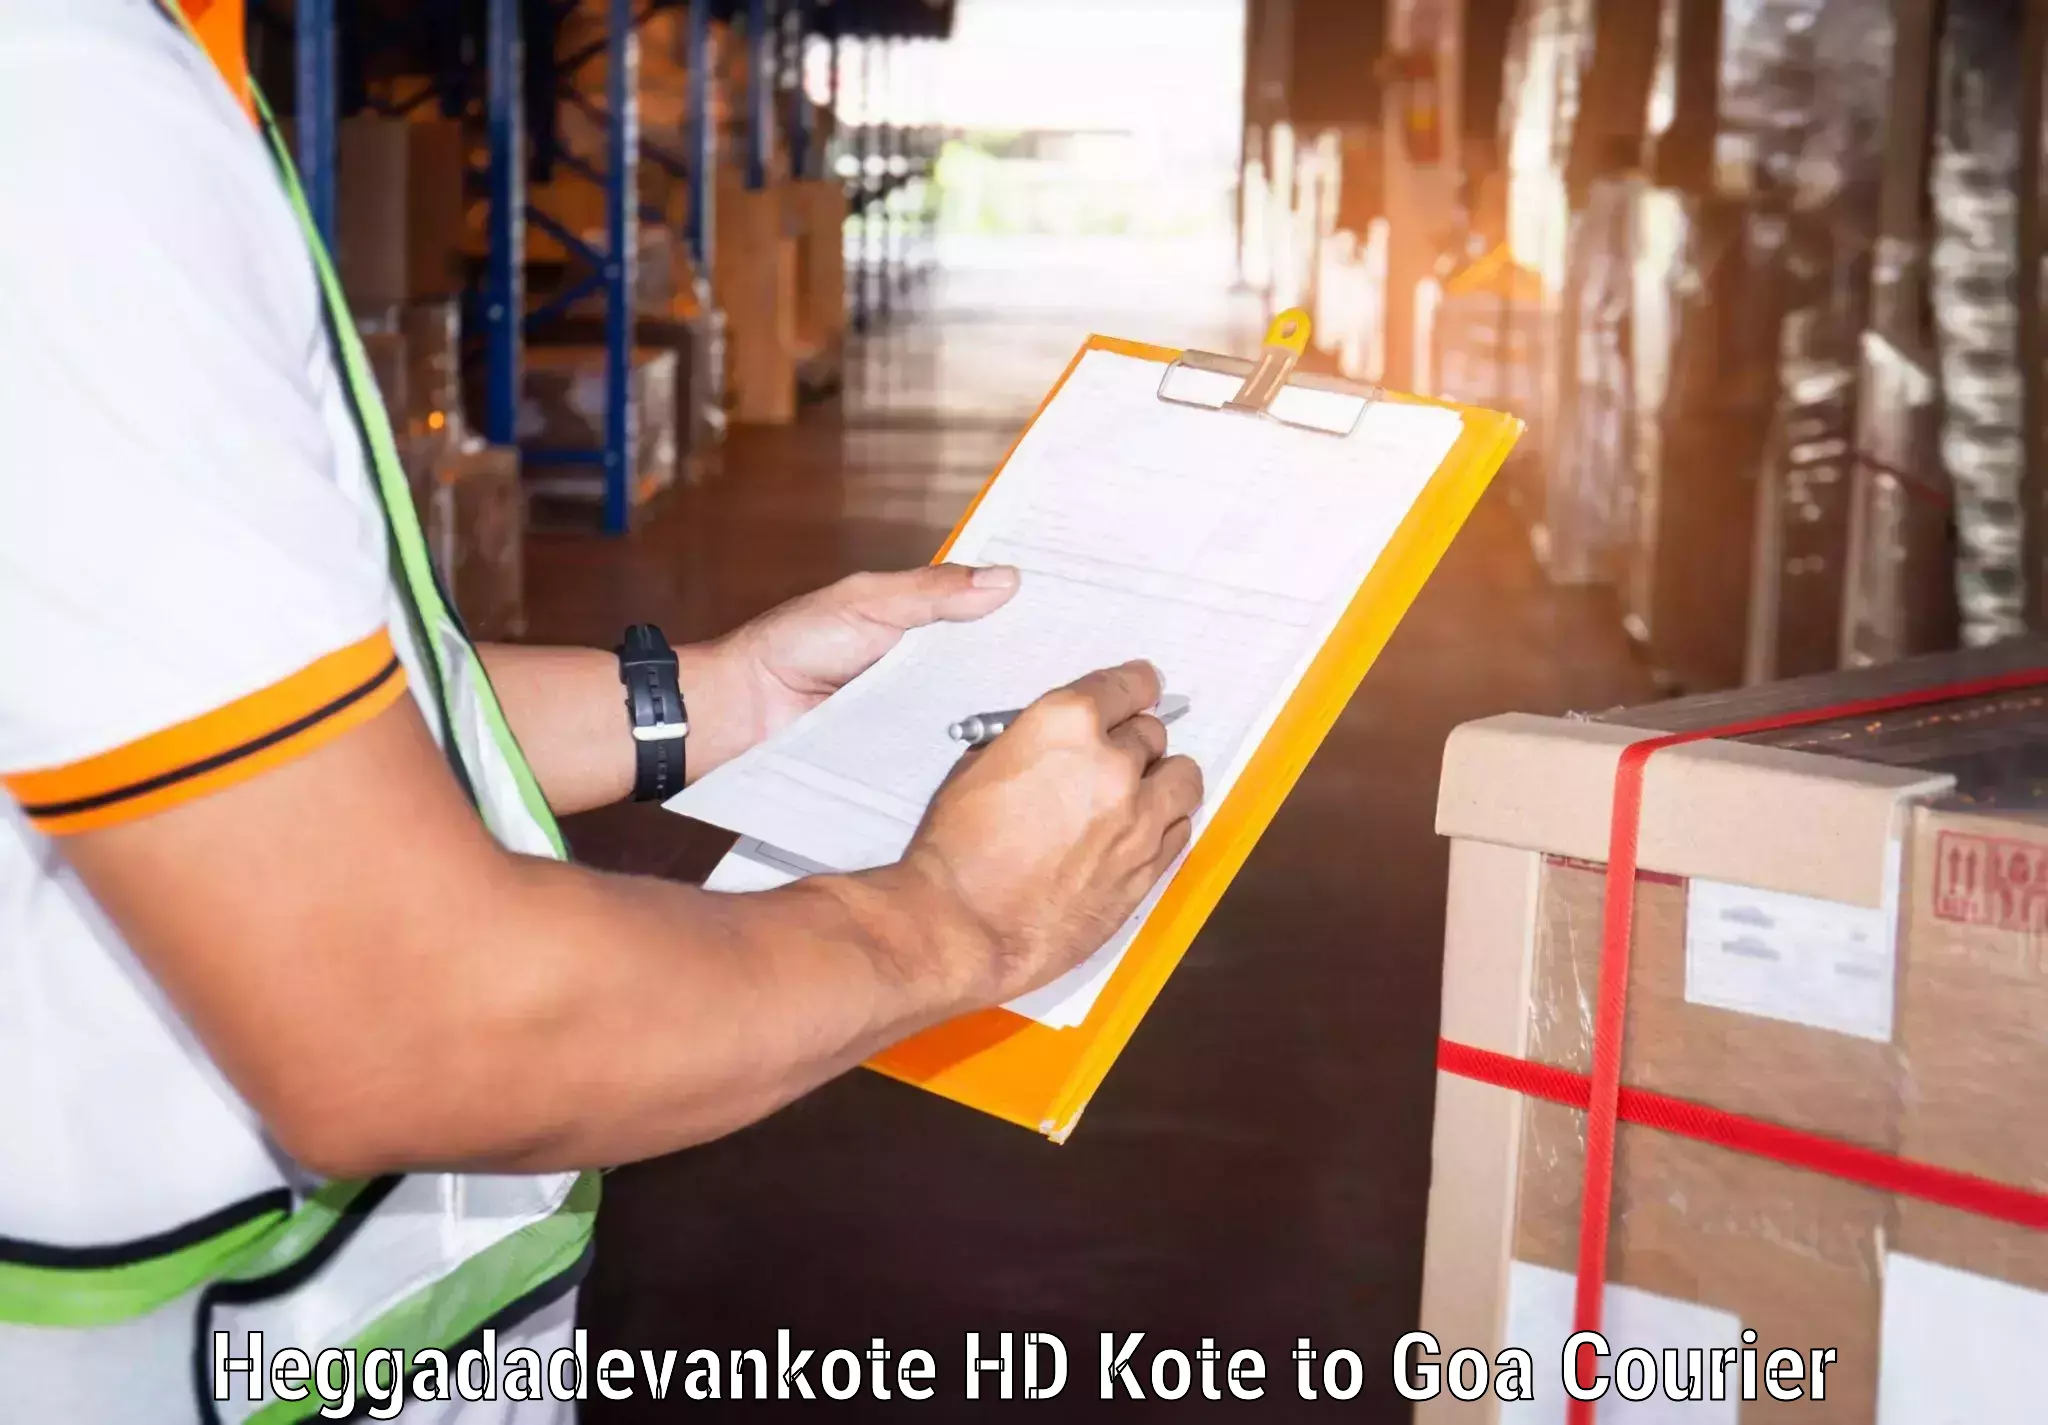 Enhanced shipping experience Heggadadevankote HD Kote to Goa University